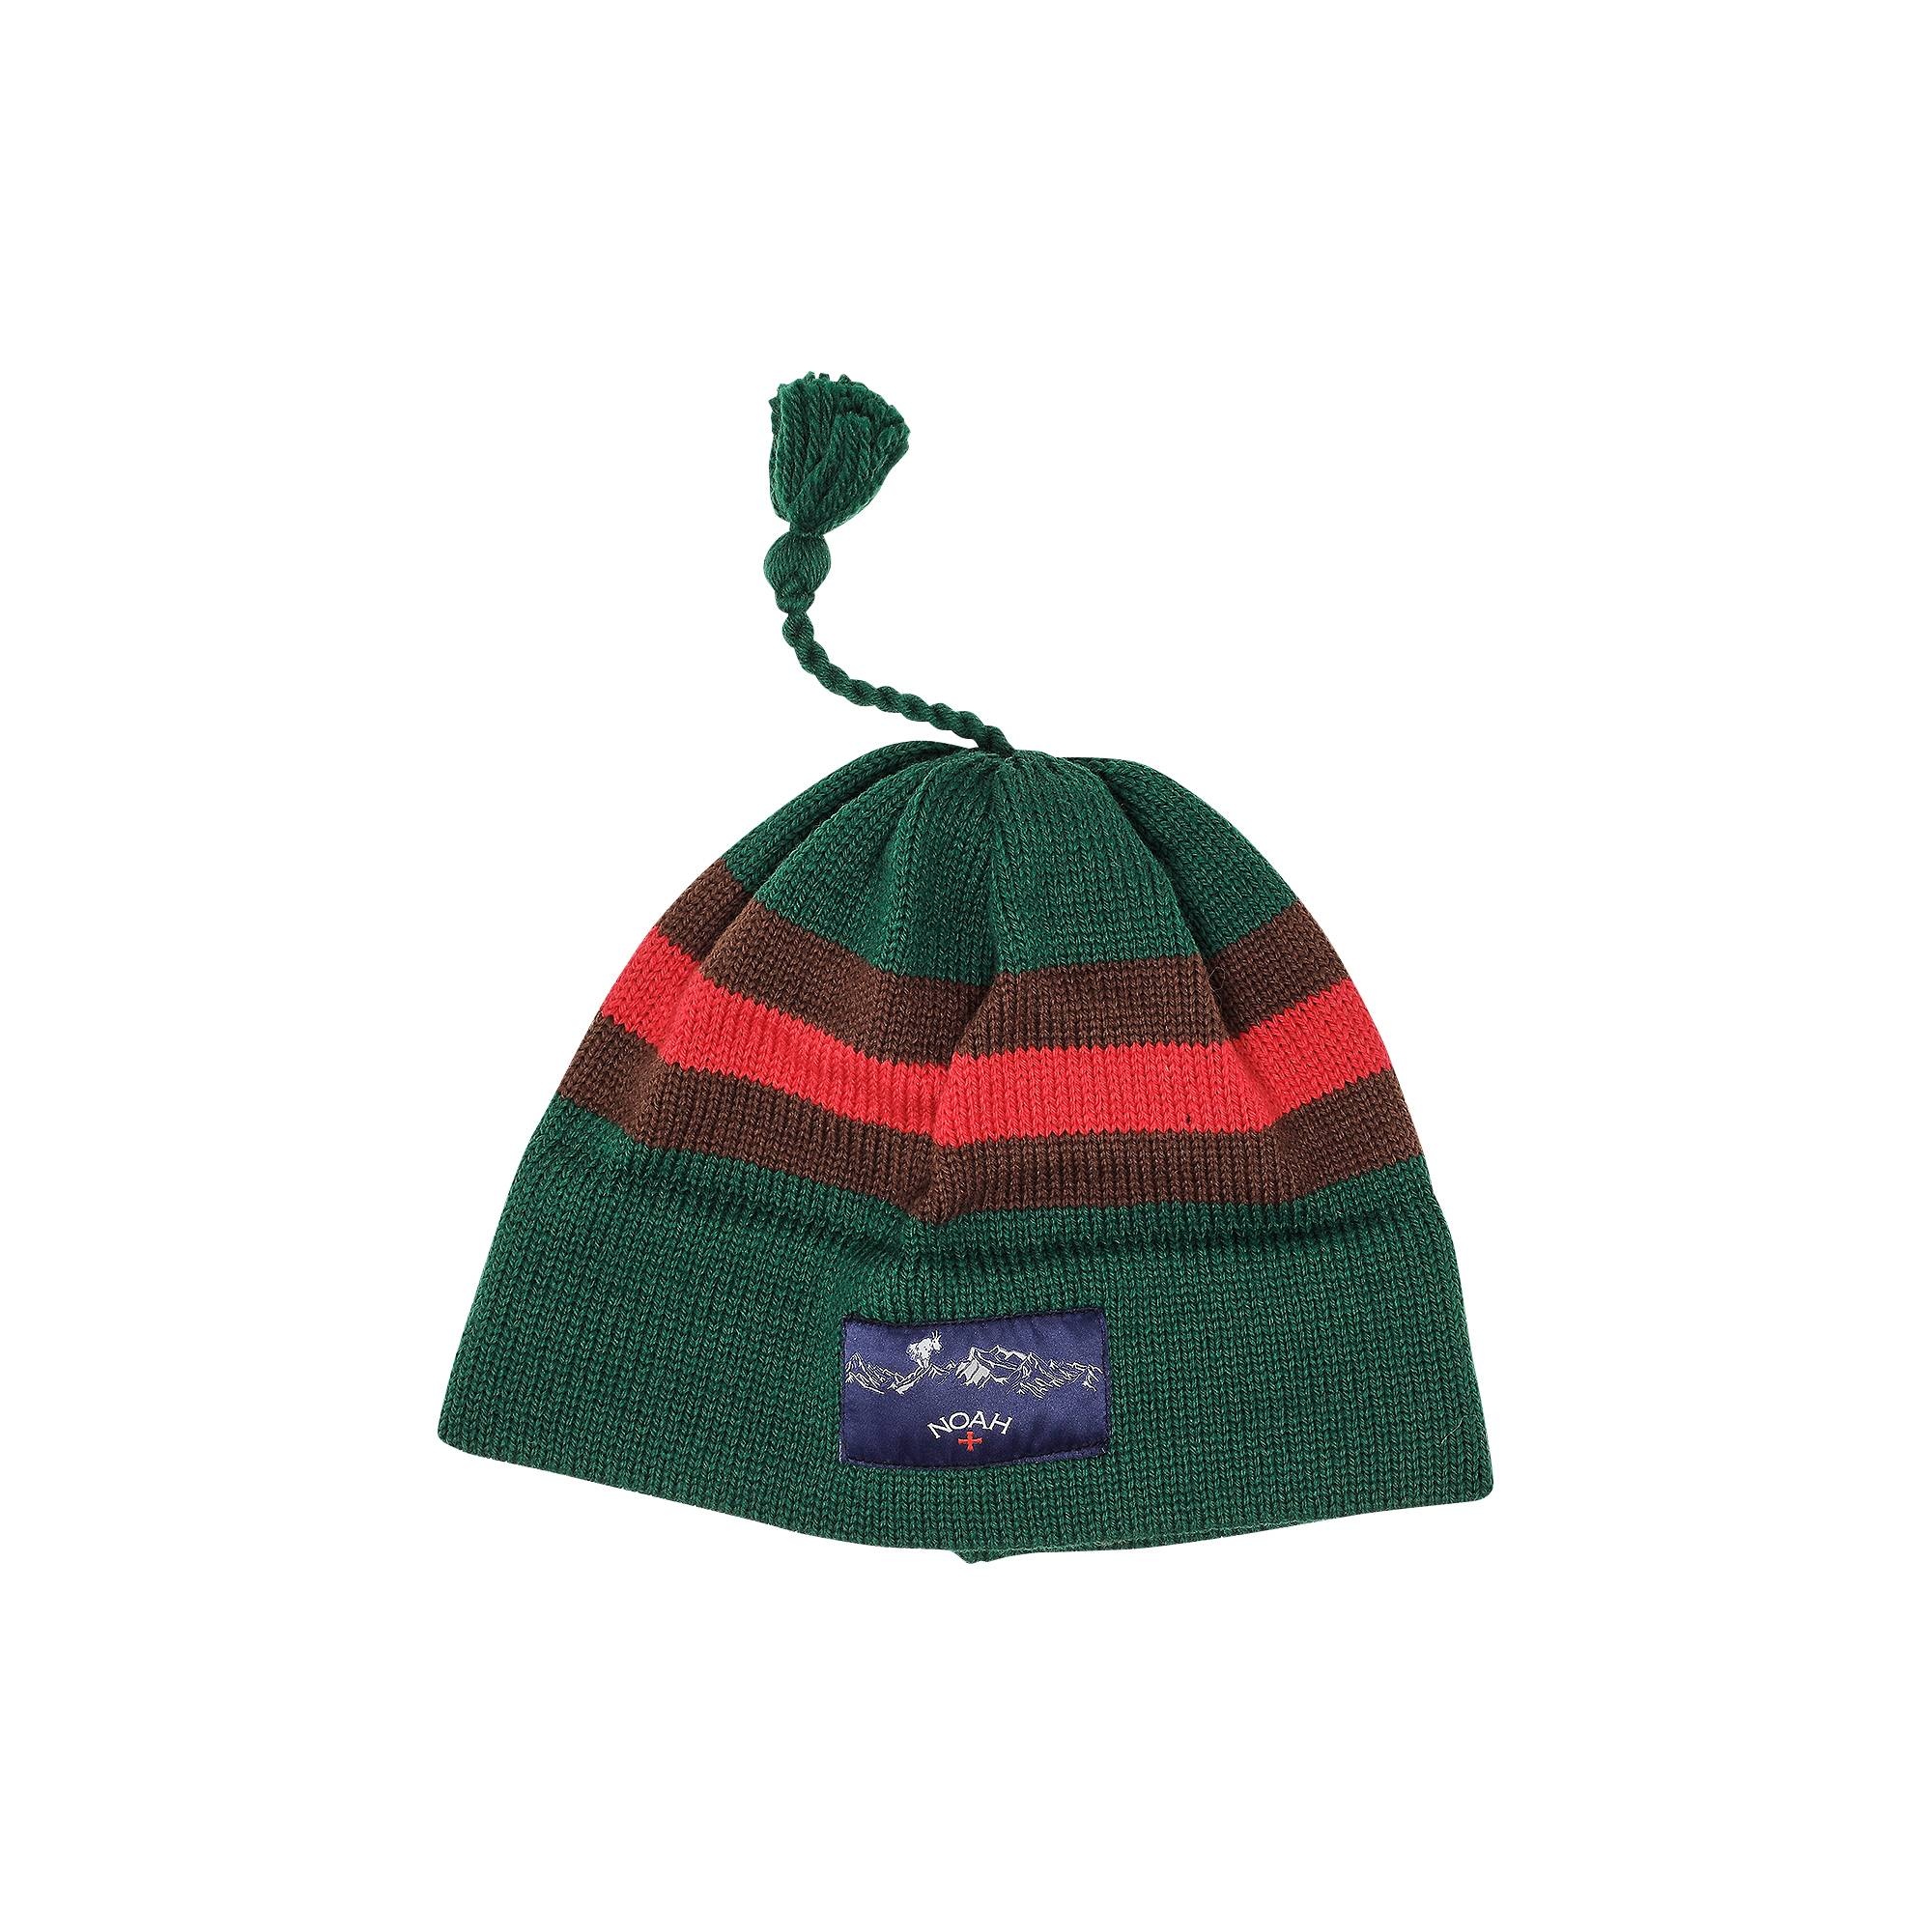 Noah Wool Ski Hat 'Bottle/Brown/Red' - 1